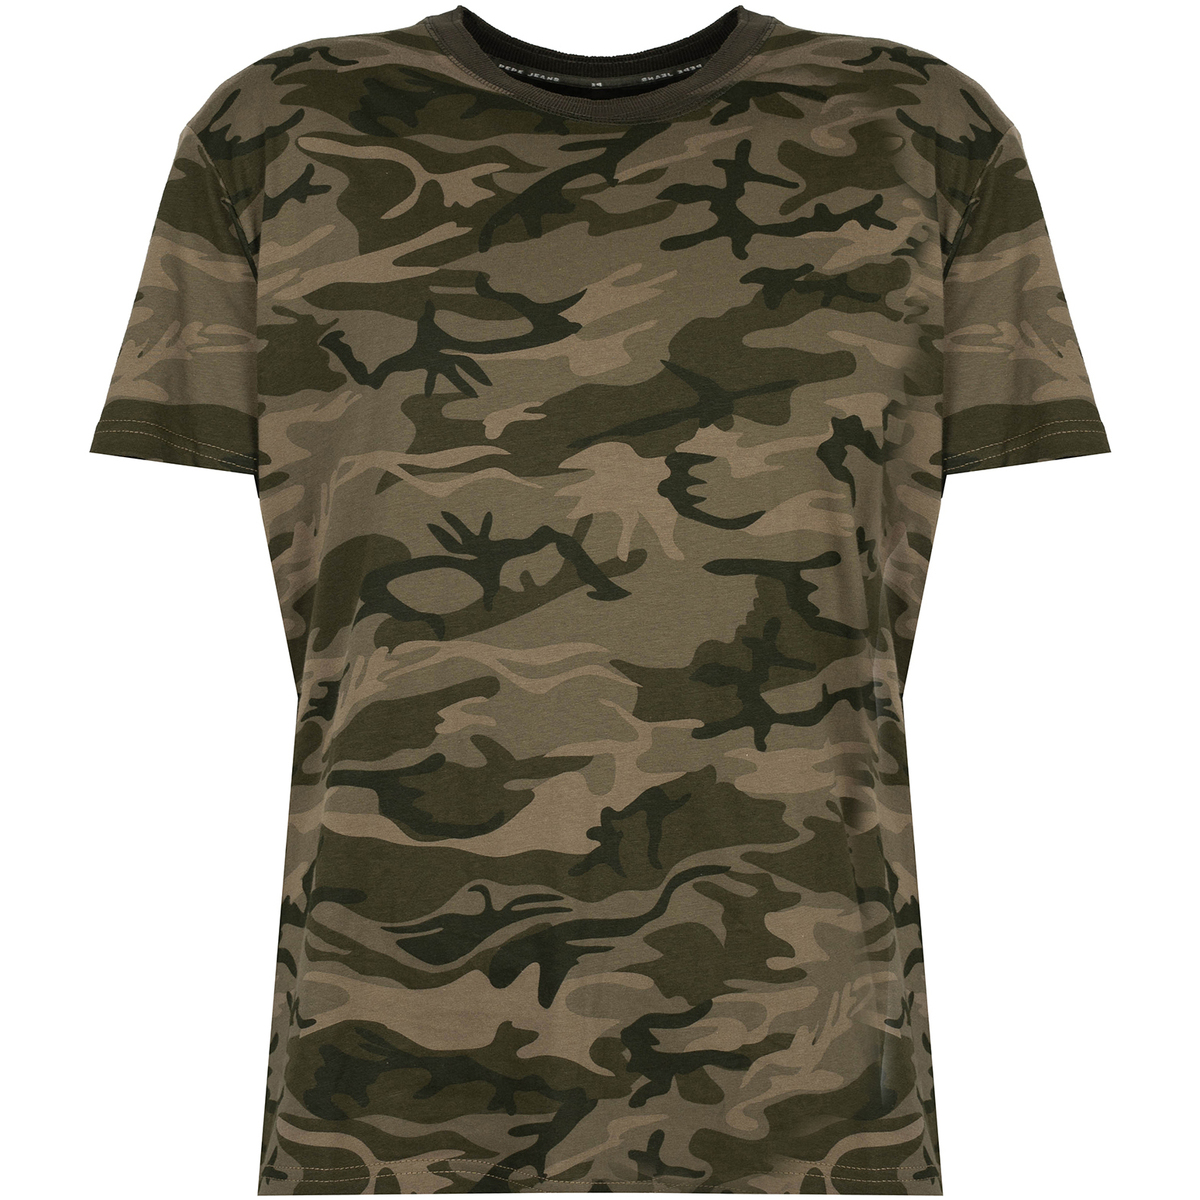 Textiel Heren T-shirts korte mouwen Pepe jeans PM508507 | Sykes Groen